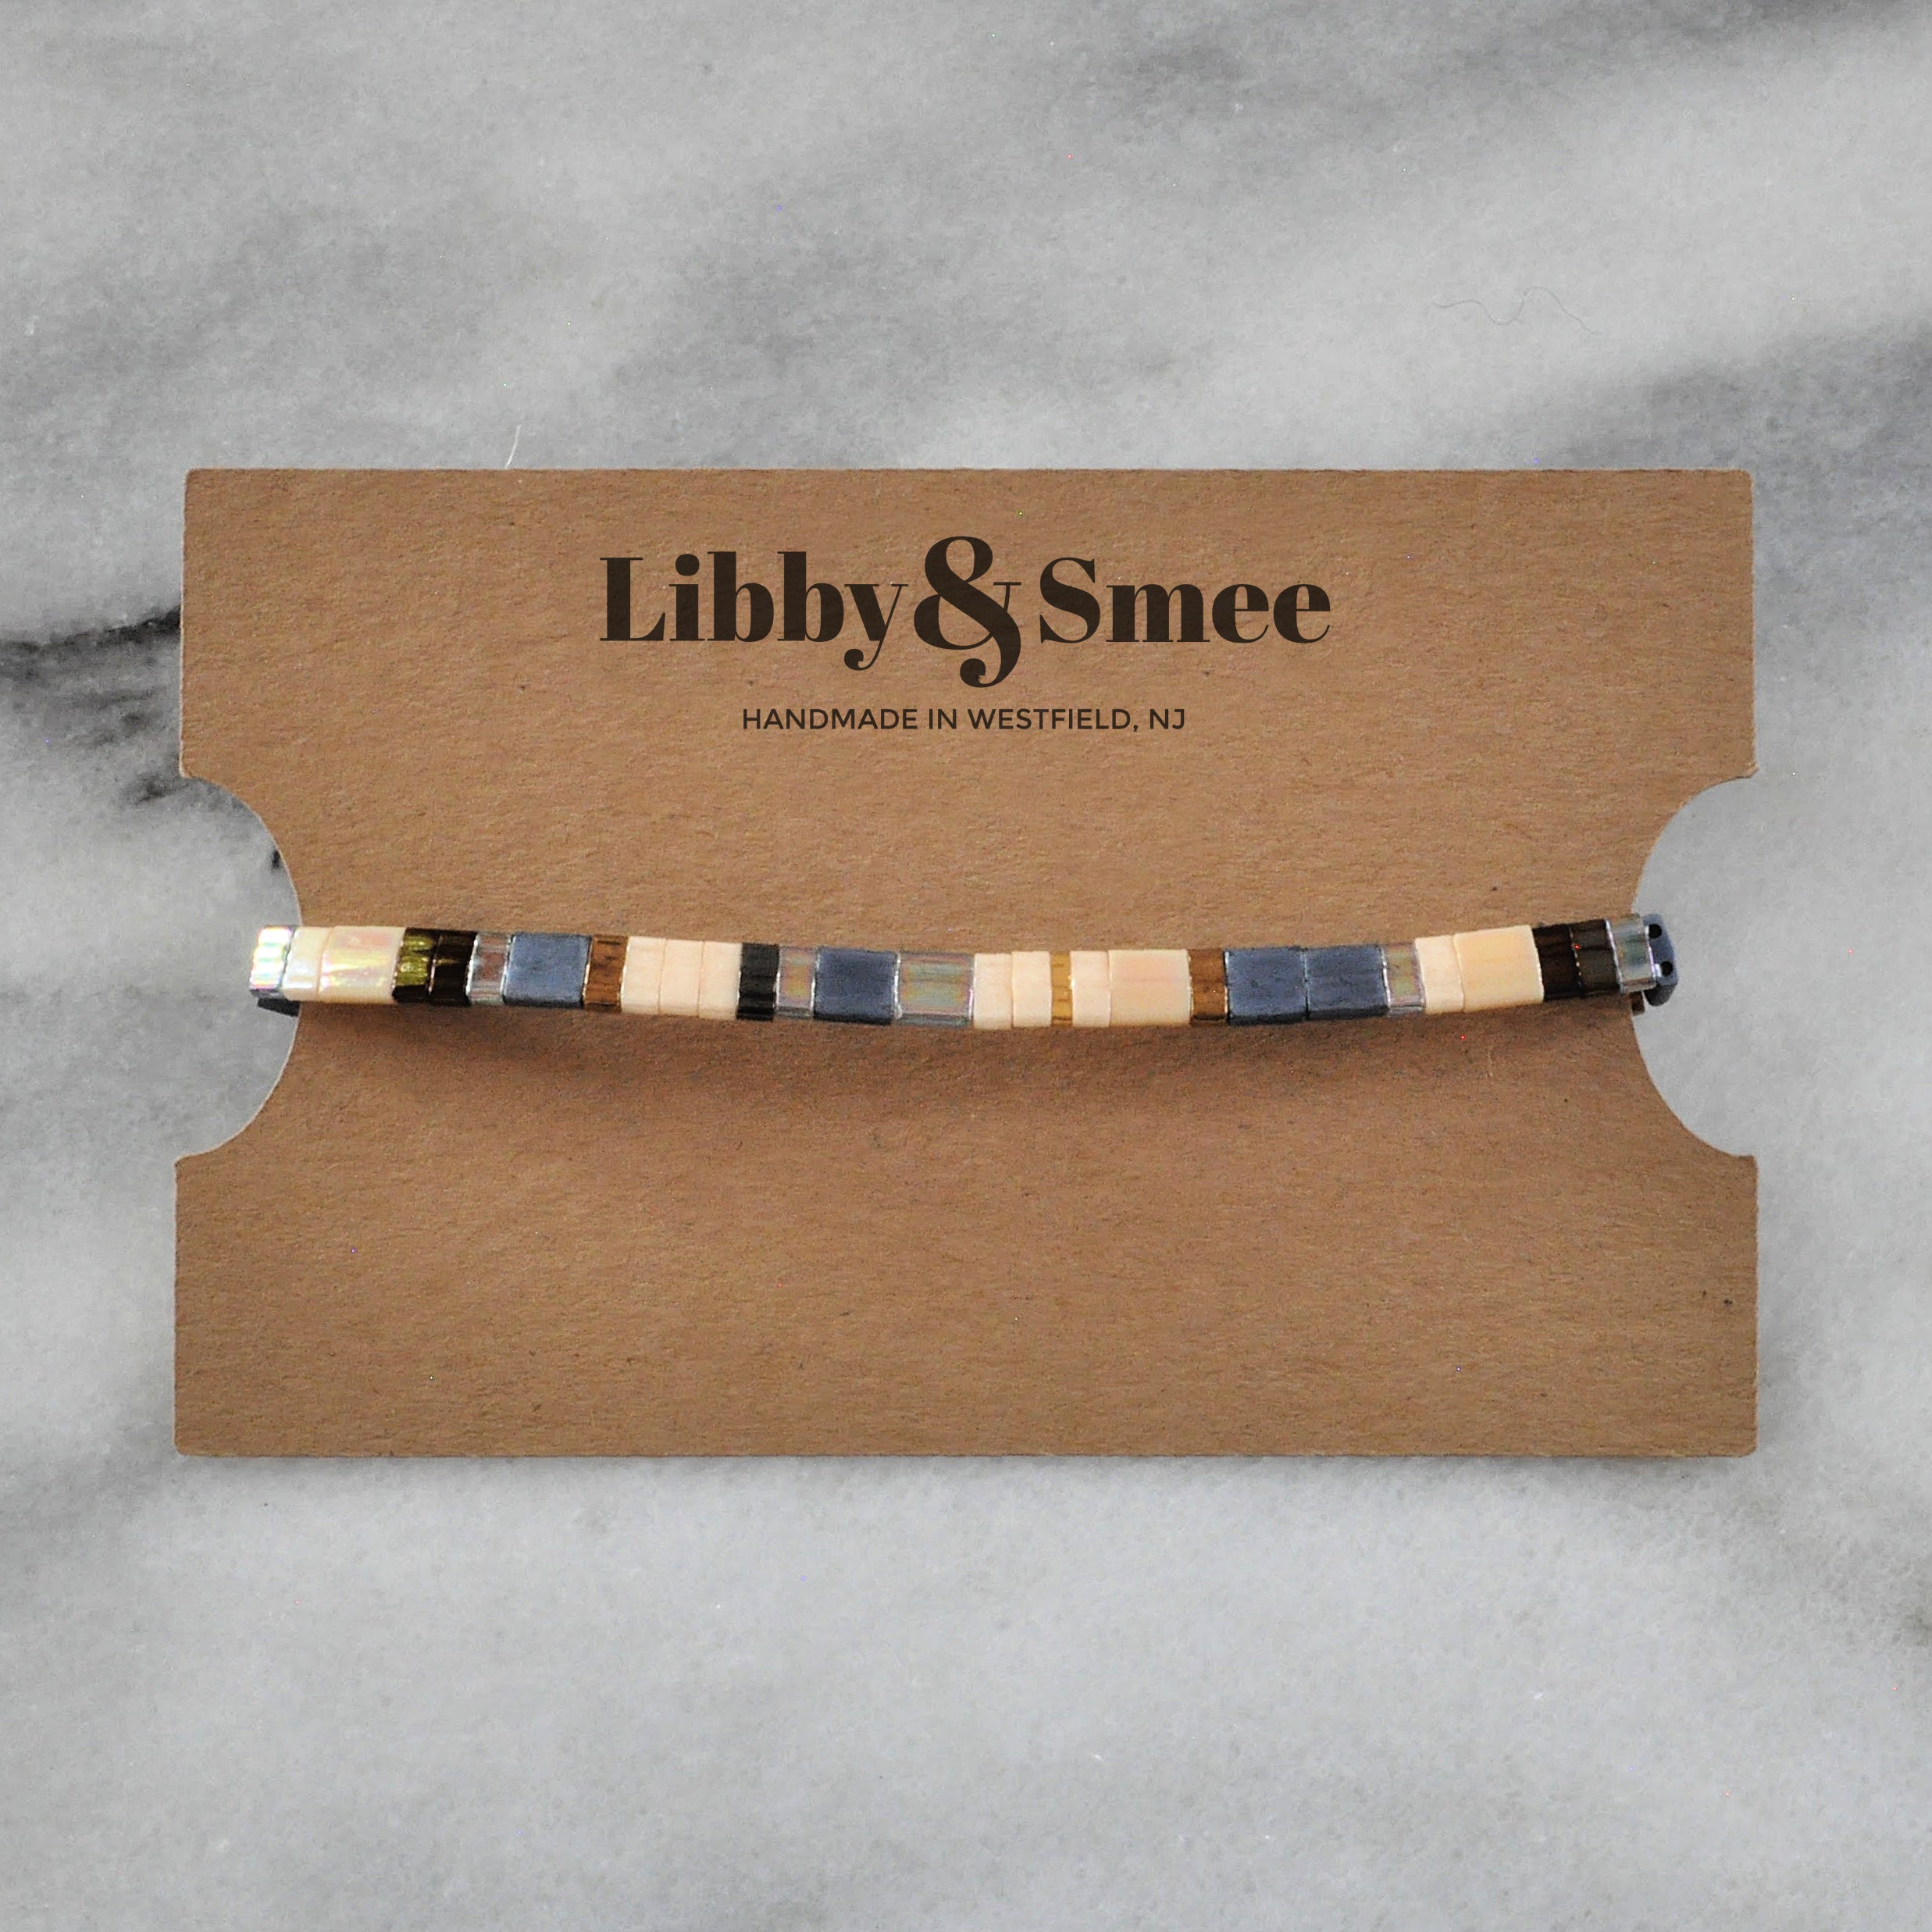 Libby & Smee stretch tile bracelet in Neutral Mix